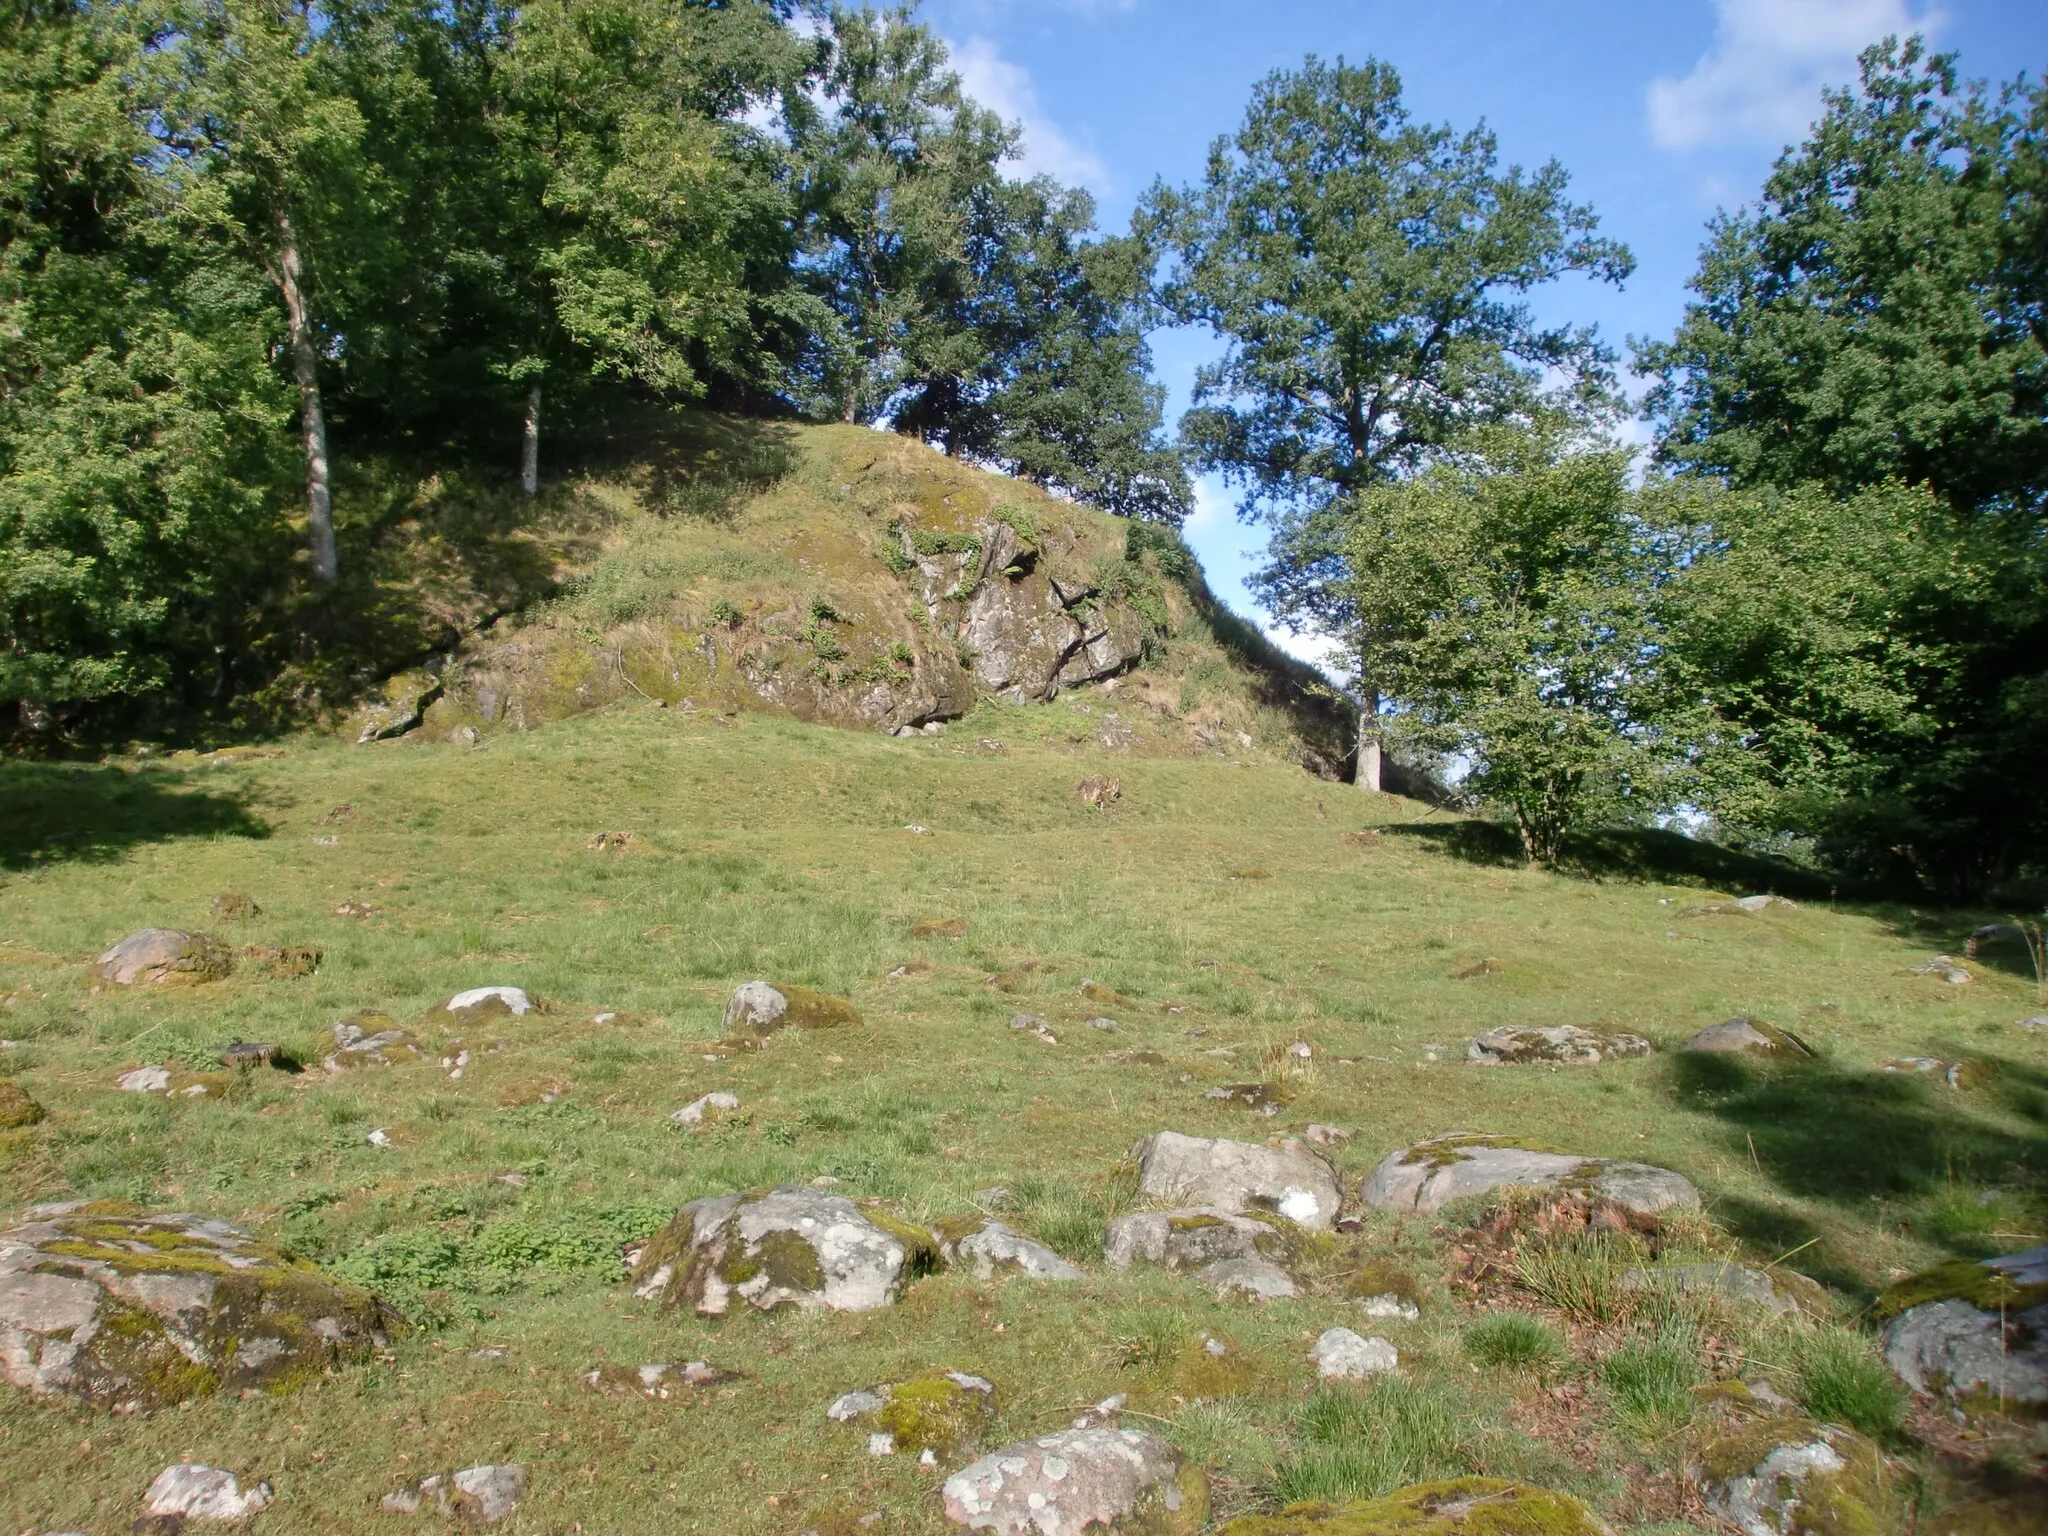 Photo showing: Castle cliff "Slottsberget" at Oresten, close to the village Skene in Sweden.